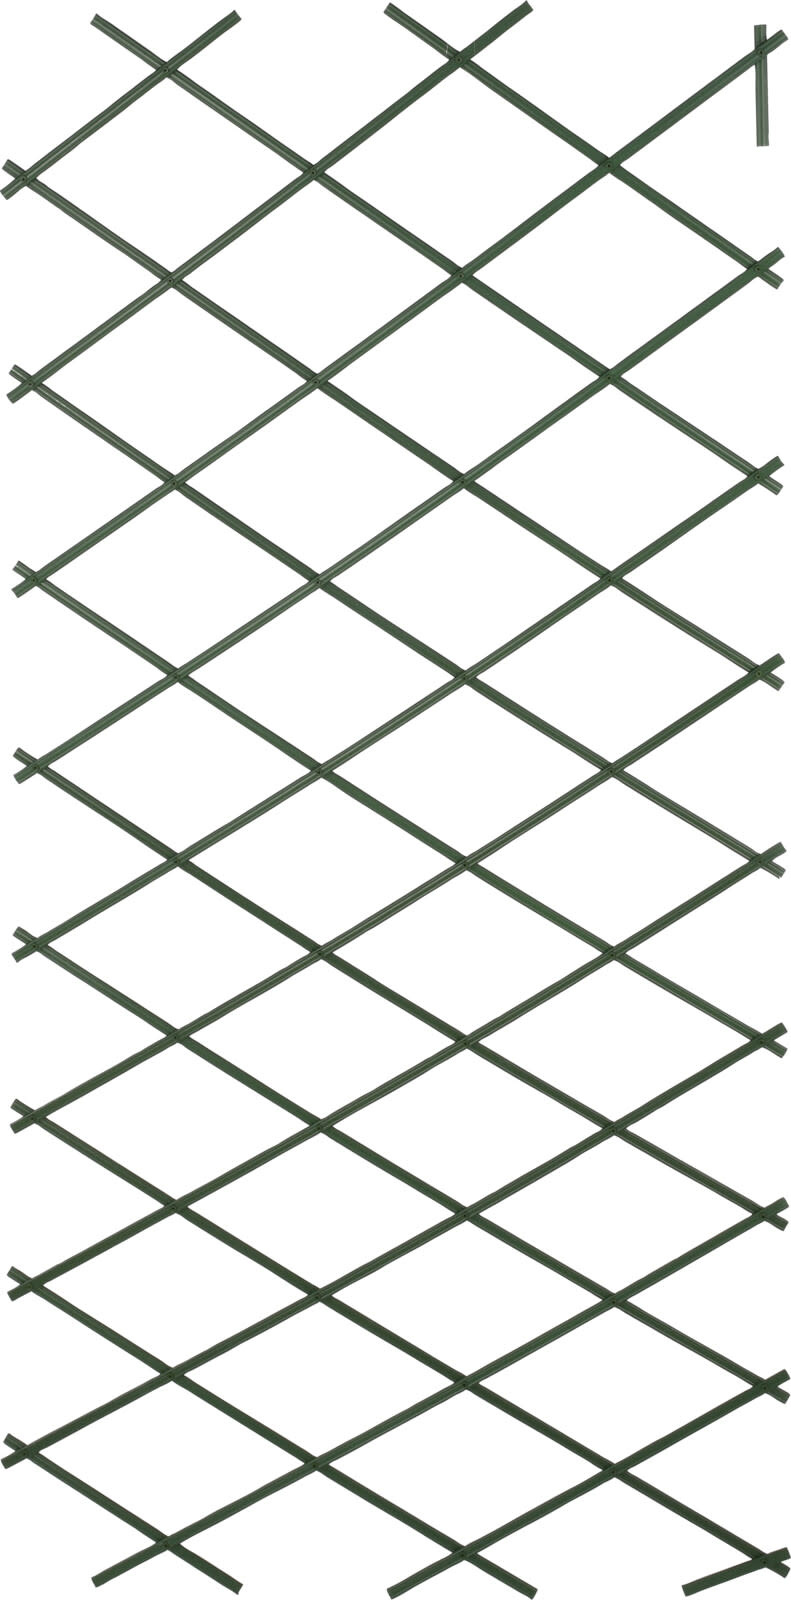 Koopman Foldable Fence